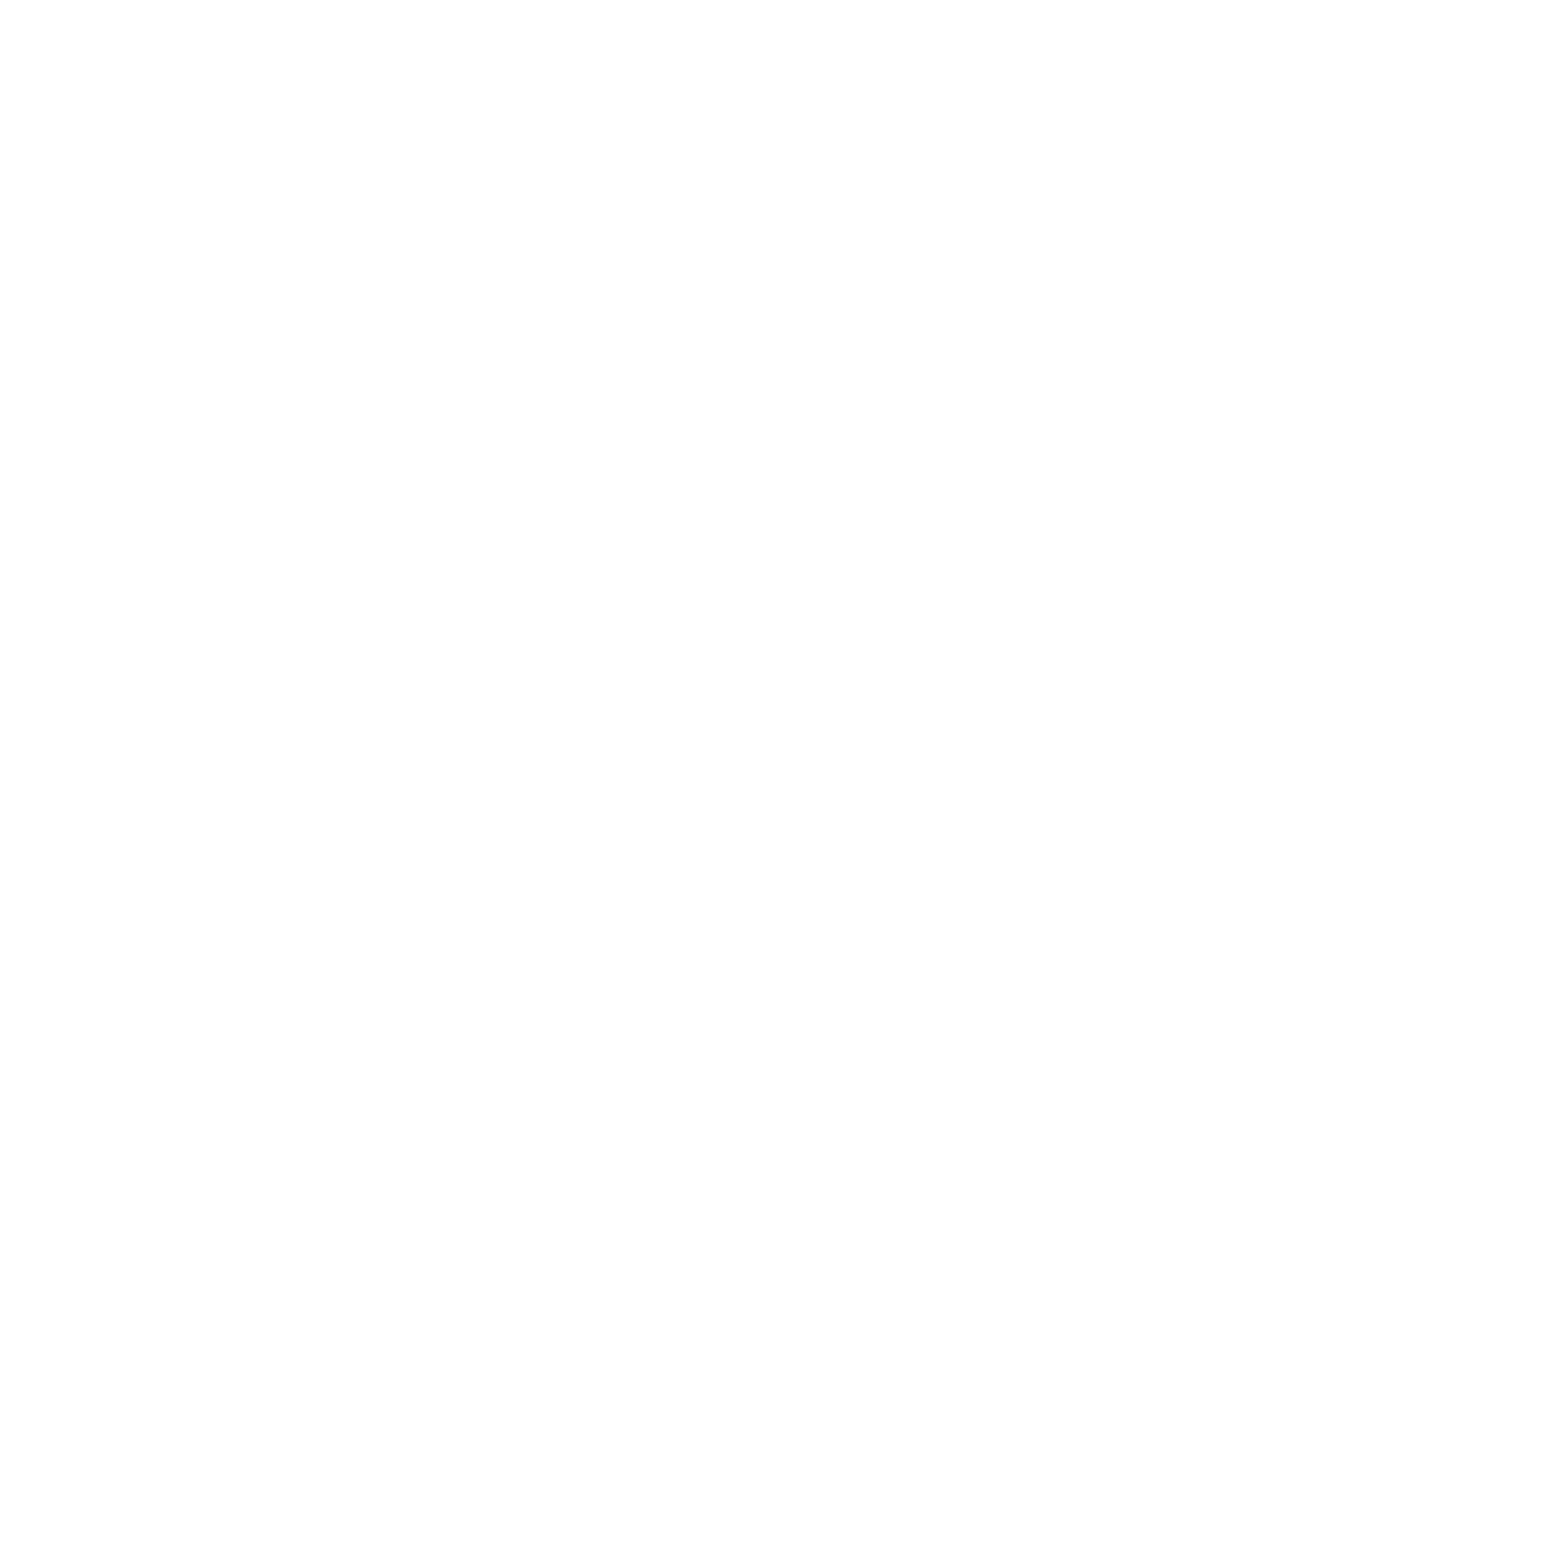 Nick Mendez website logo